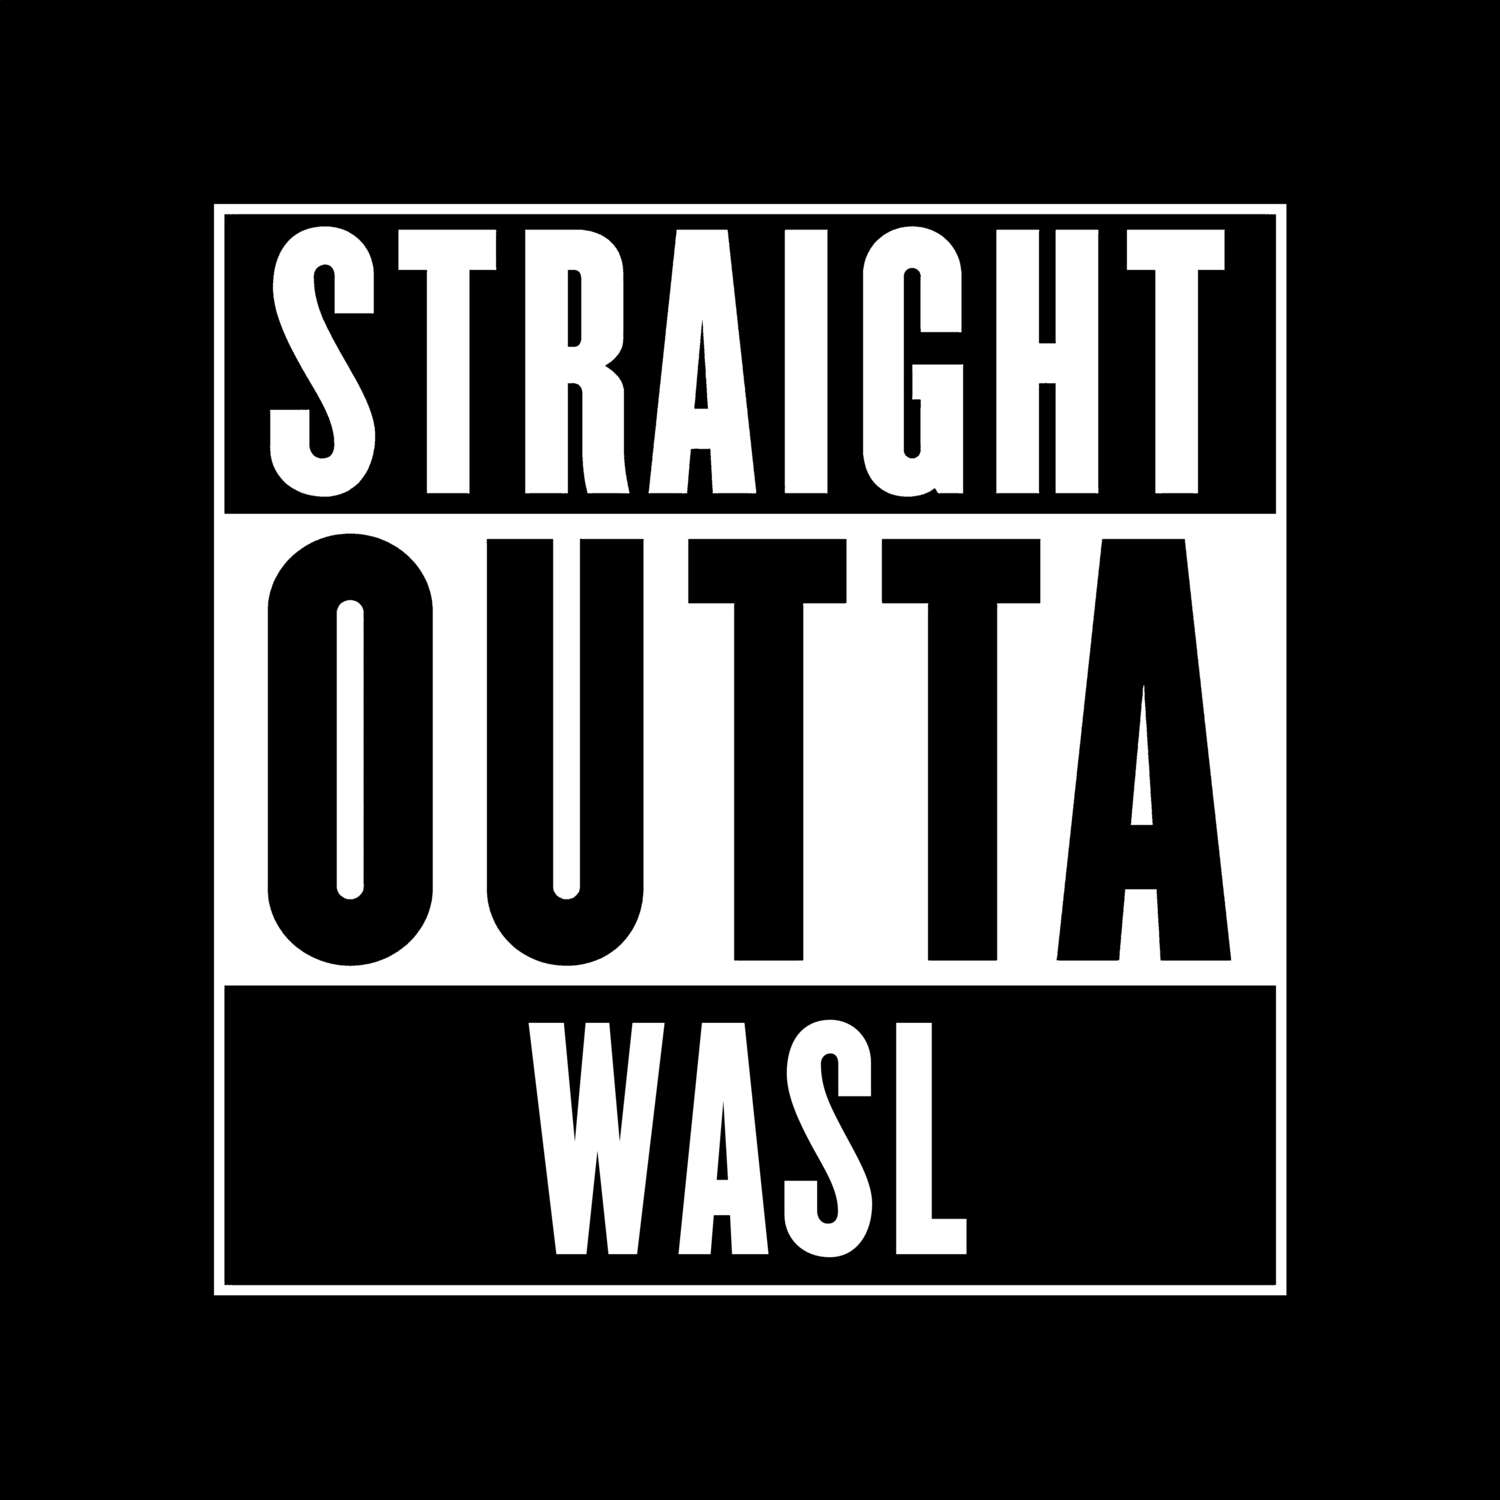 Wasl T-Shirt »Straight Outta«